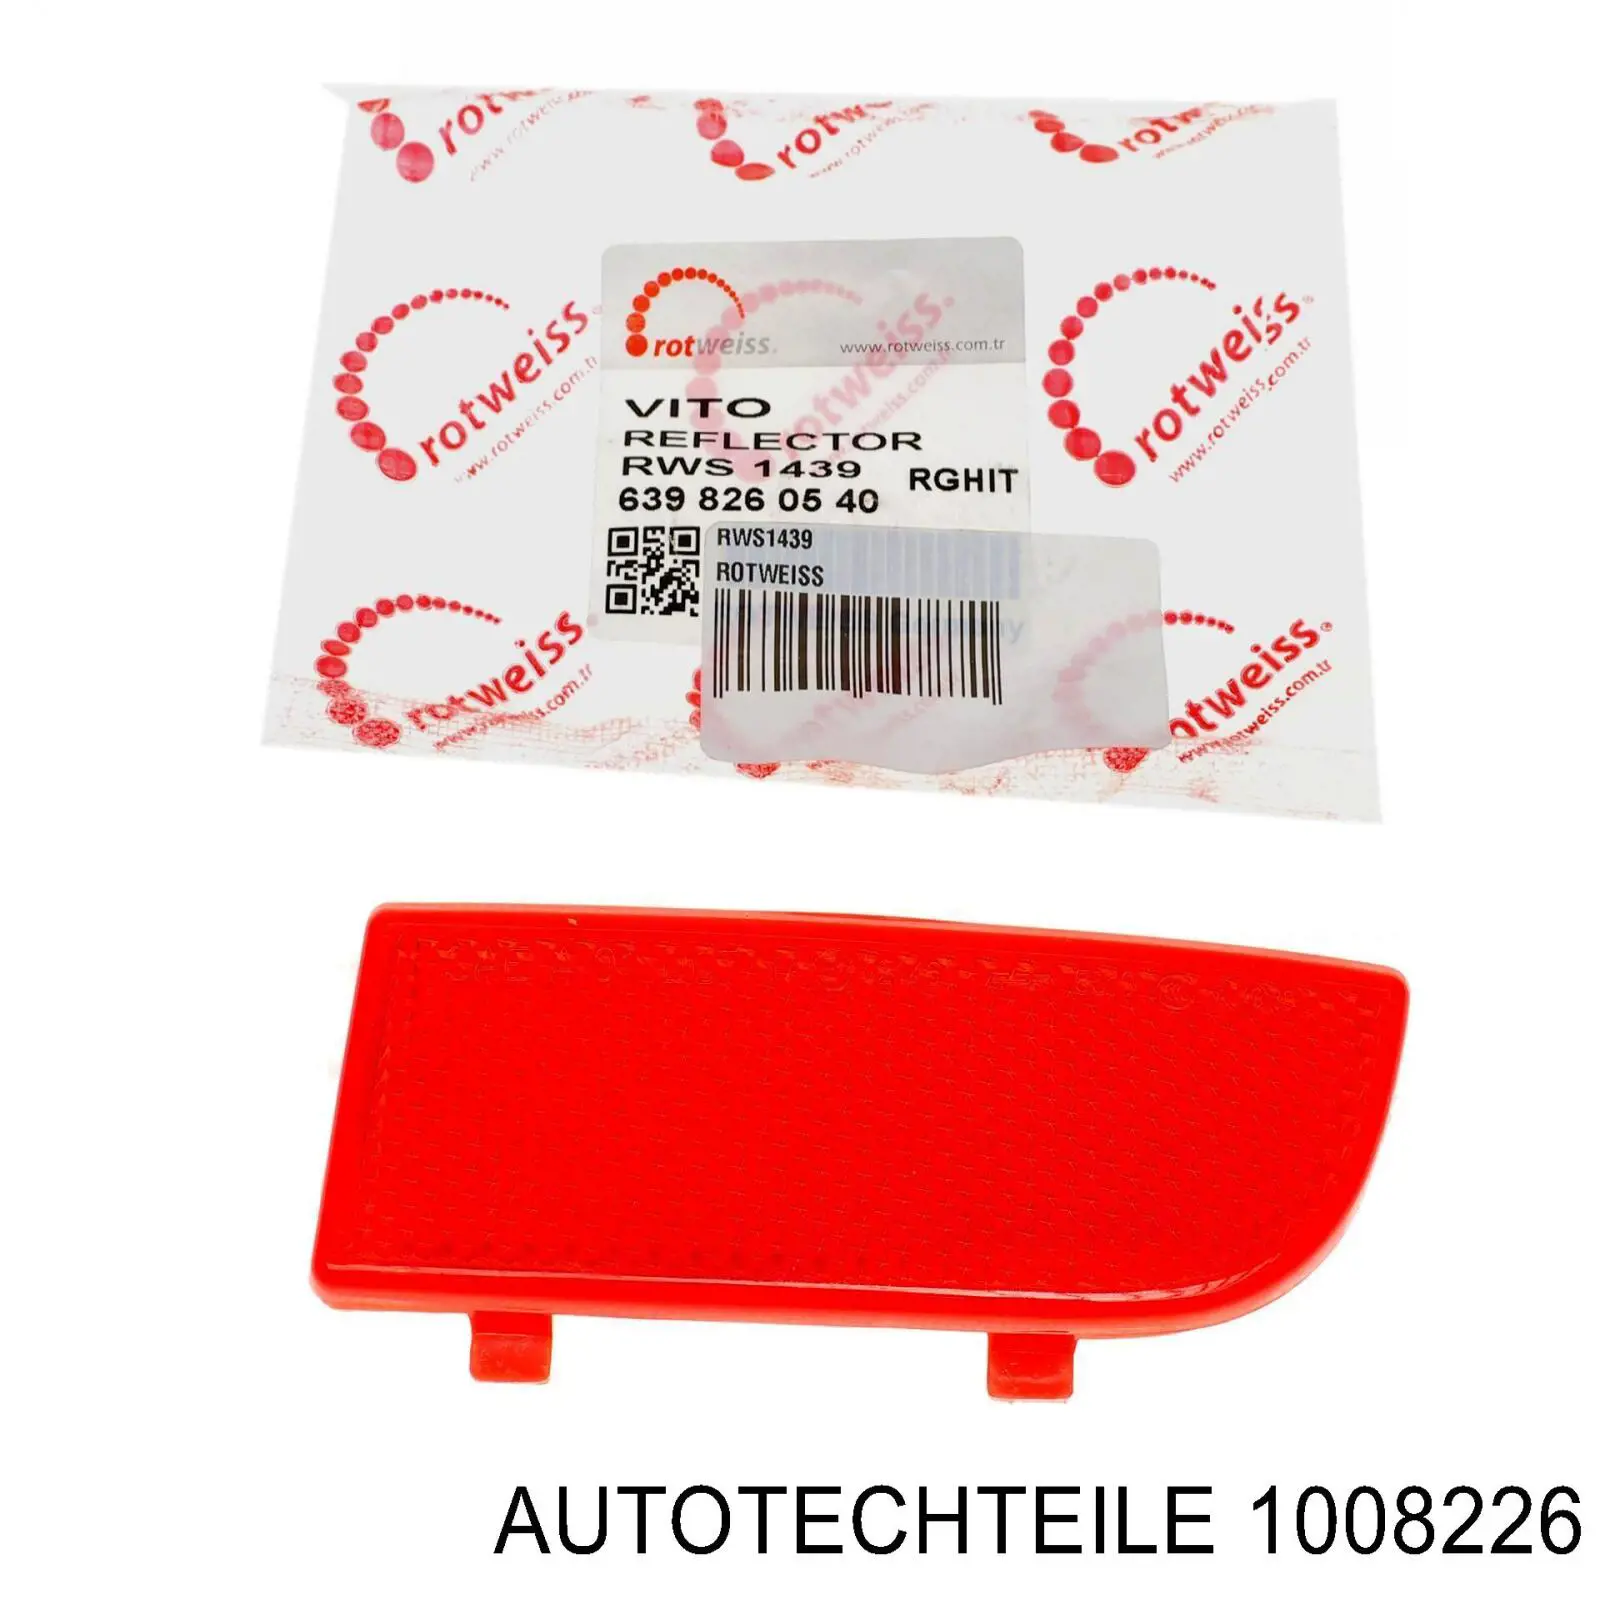 1008226 Autotechteile катафот (відбивач заднього бампера, правий)